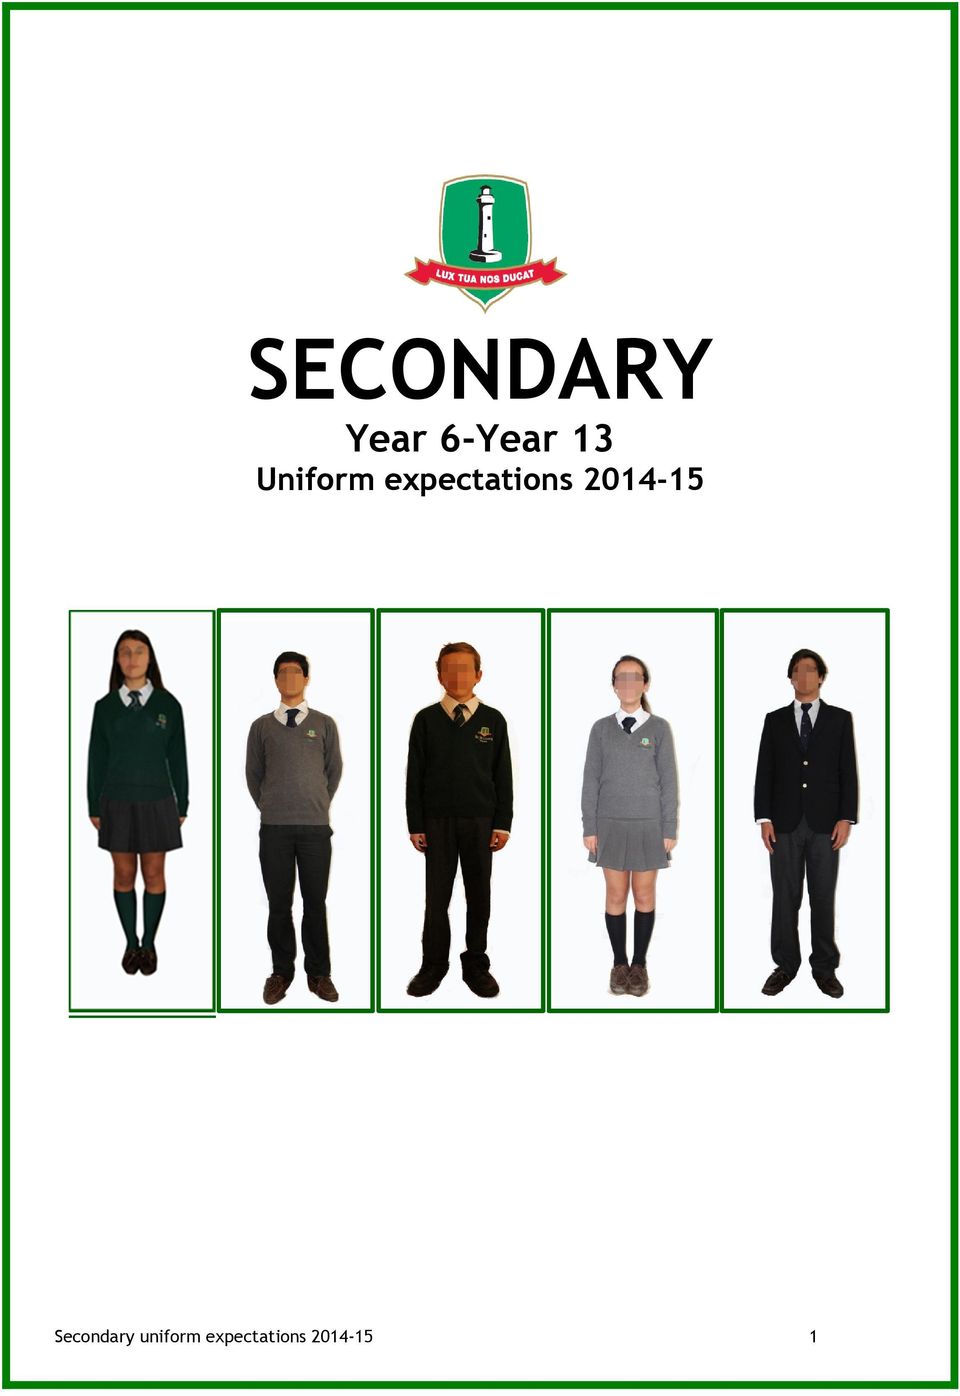 2014-15 Secondary